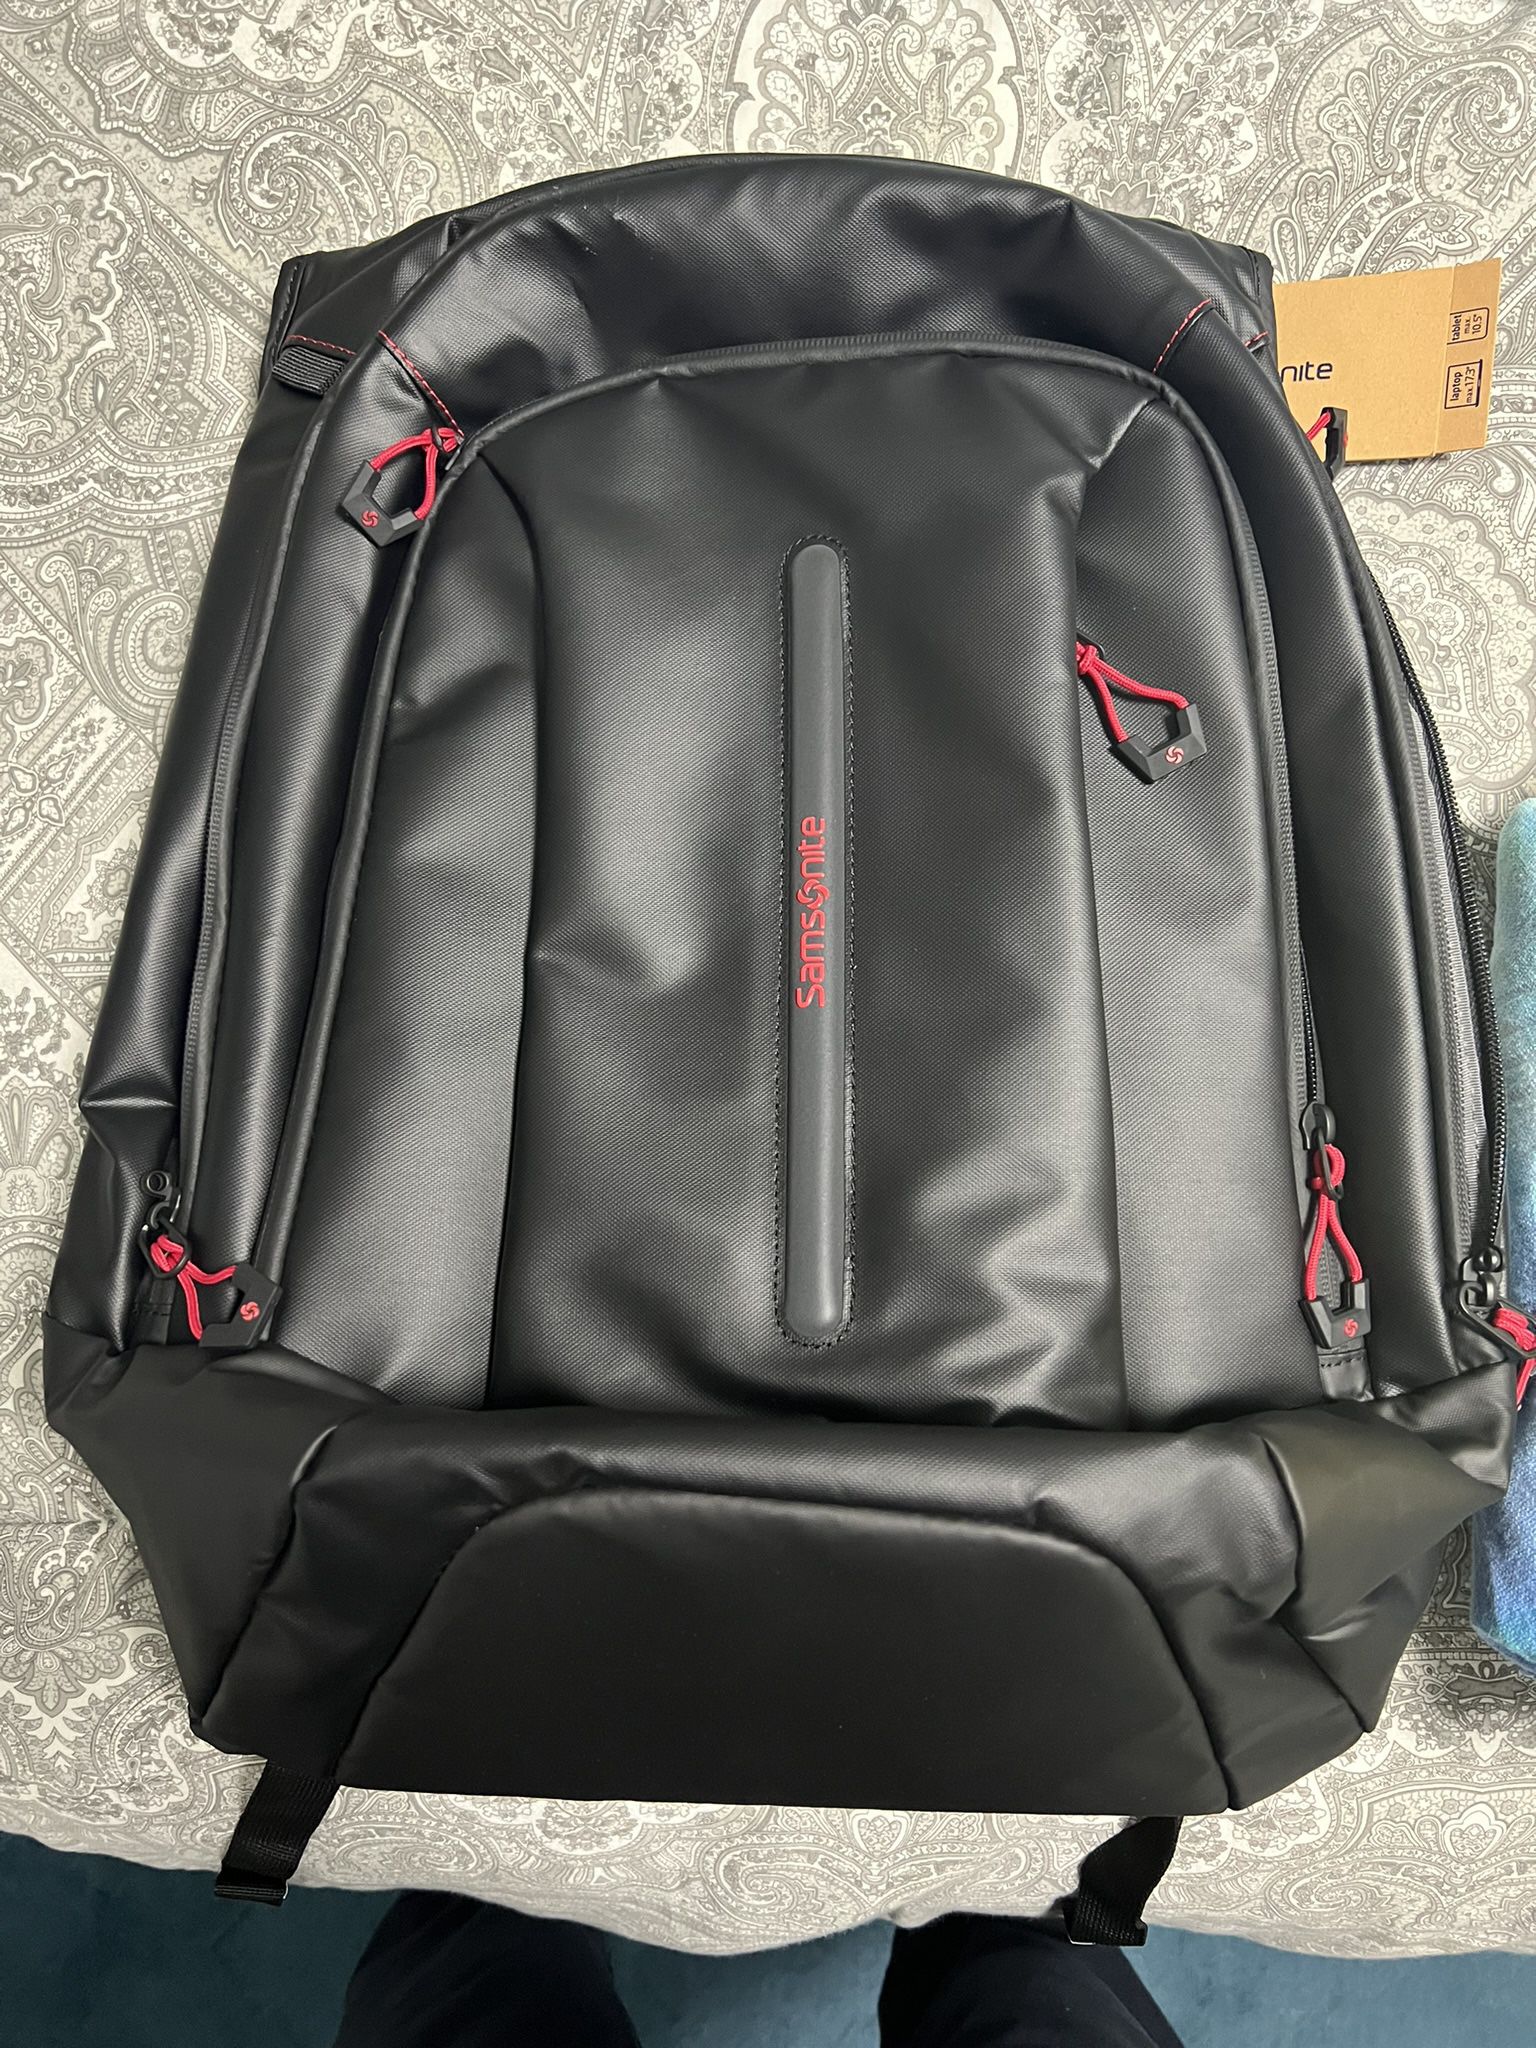 EcoDiver Samsonite Backpack (L)